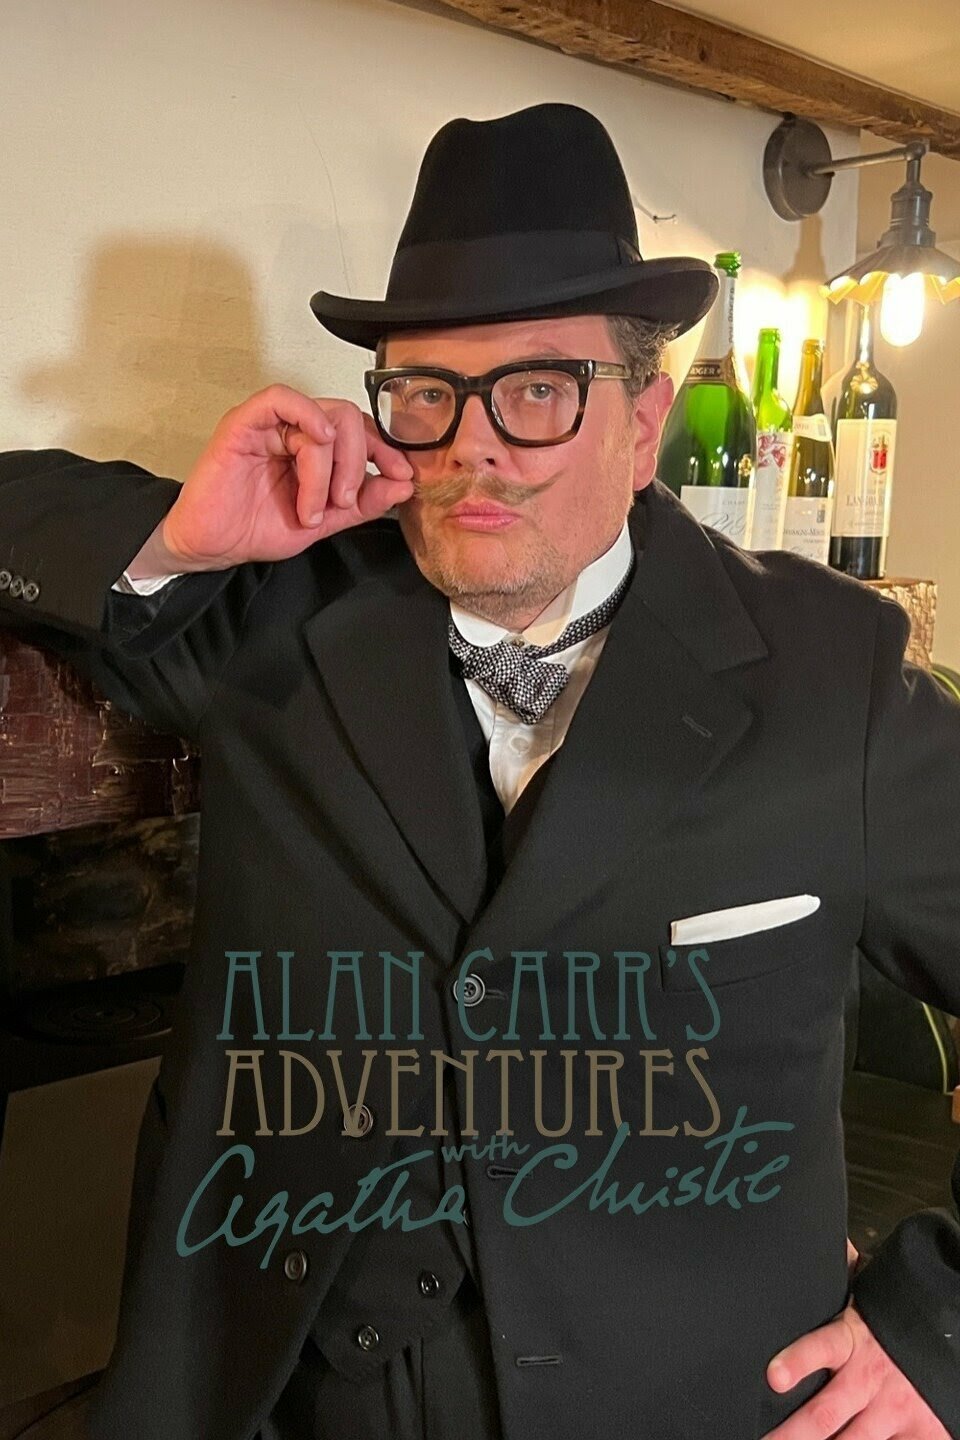 Alan Carr's Adventures with Agatha Christie ne zaman